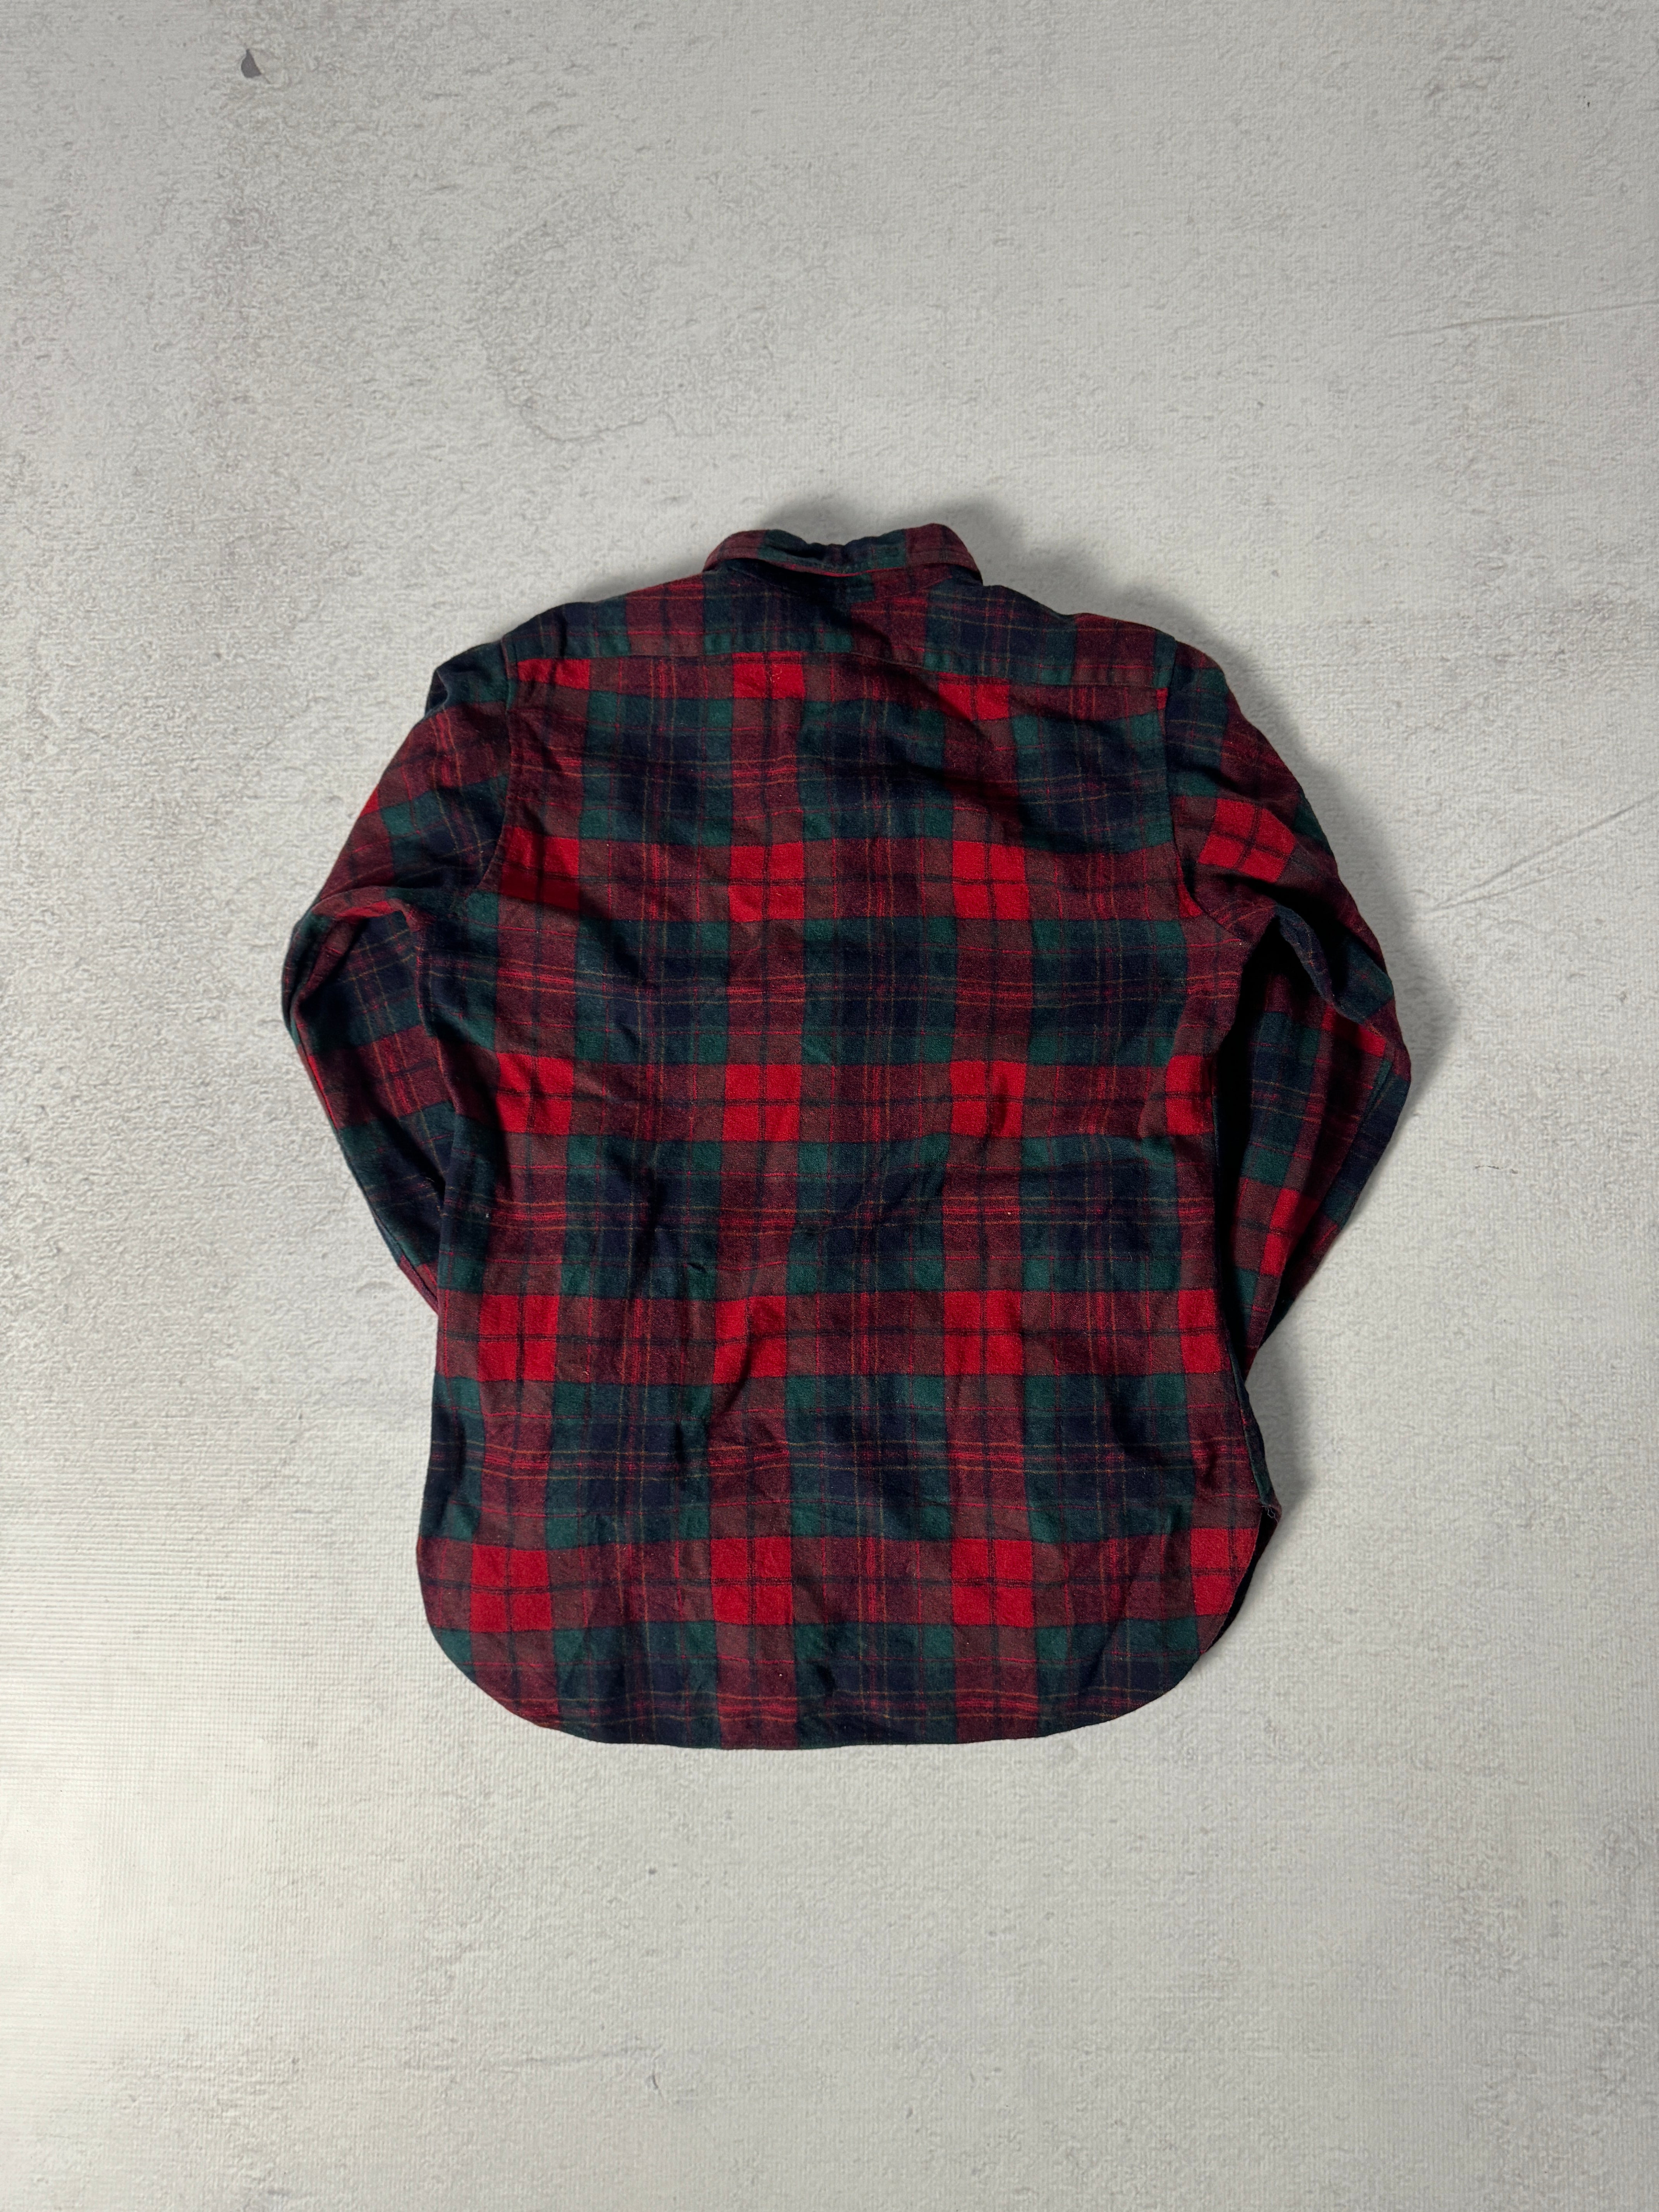 Vintage Pendleton Flannel Buttoned Shirt - Women's Medium